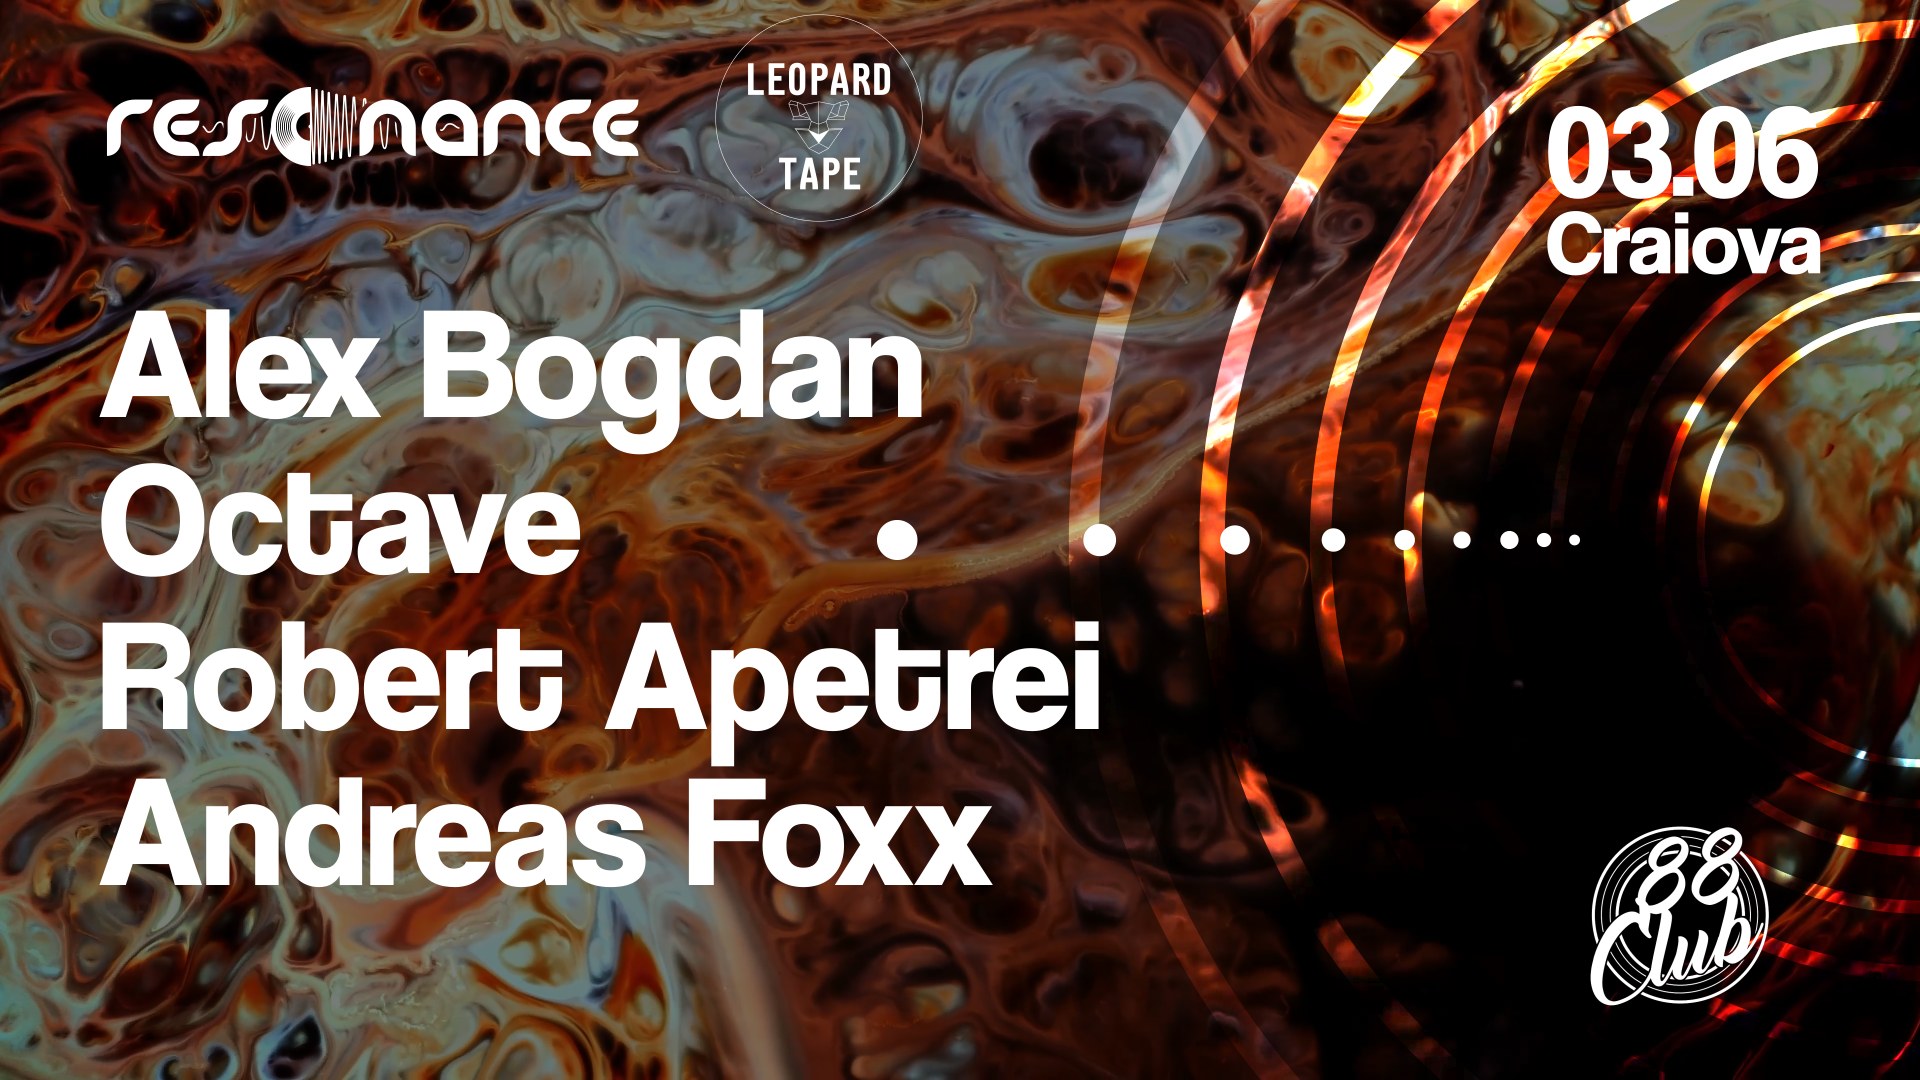 Octave ● Alex Bogdan ● Robert Apetrei ● Andreas Foxx @ Club 88